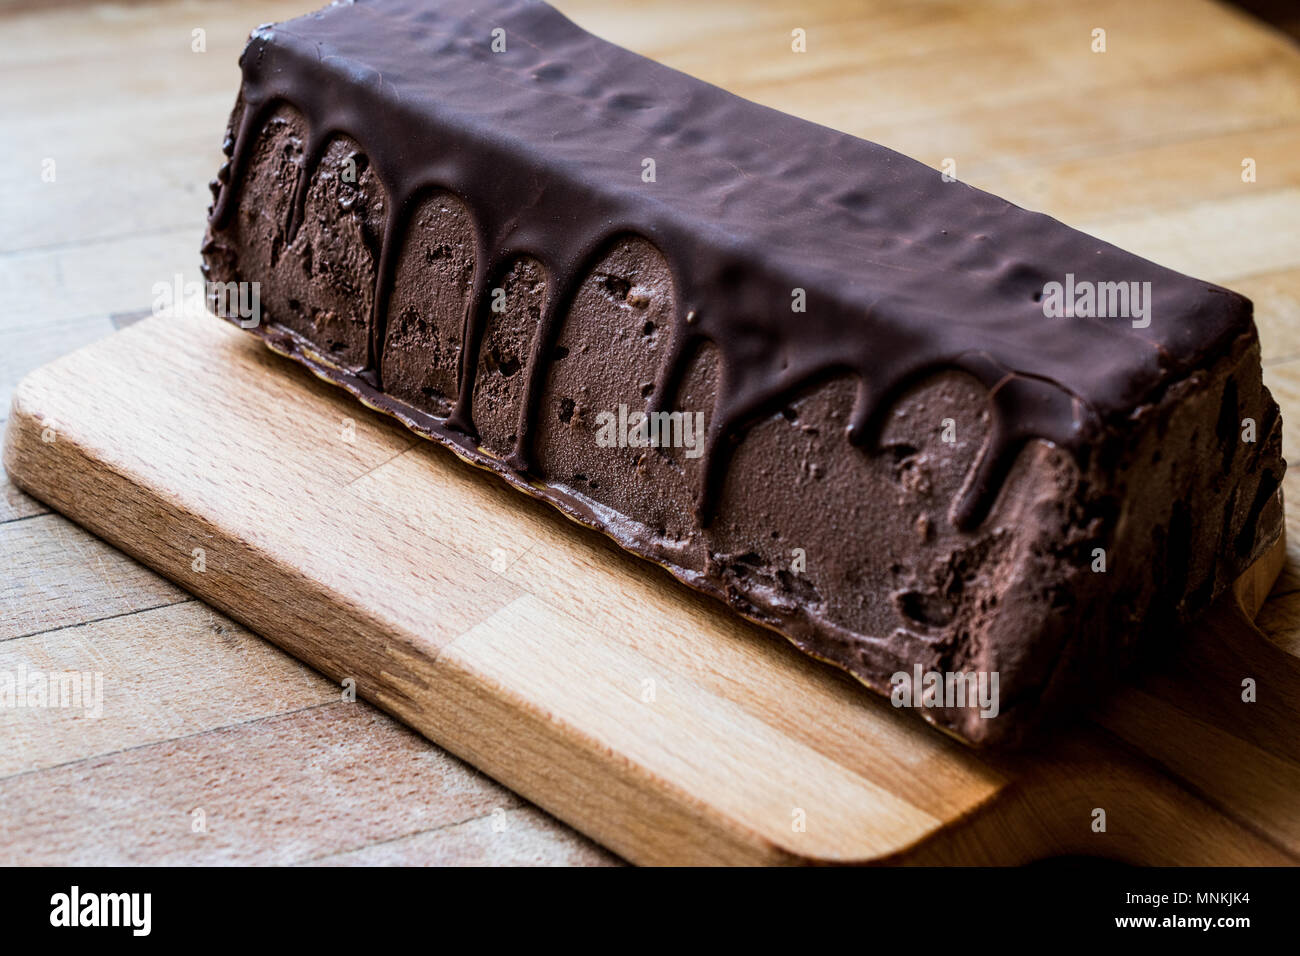 Semifreddo Cake - ice cream with chocolate sauce. Traditional Dessert. Stock Photo